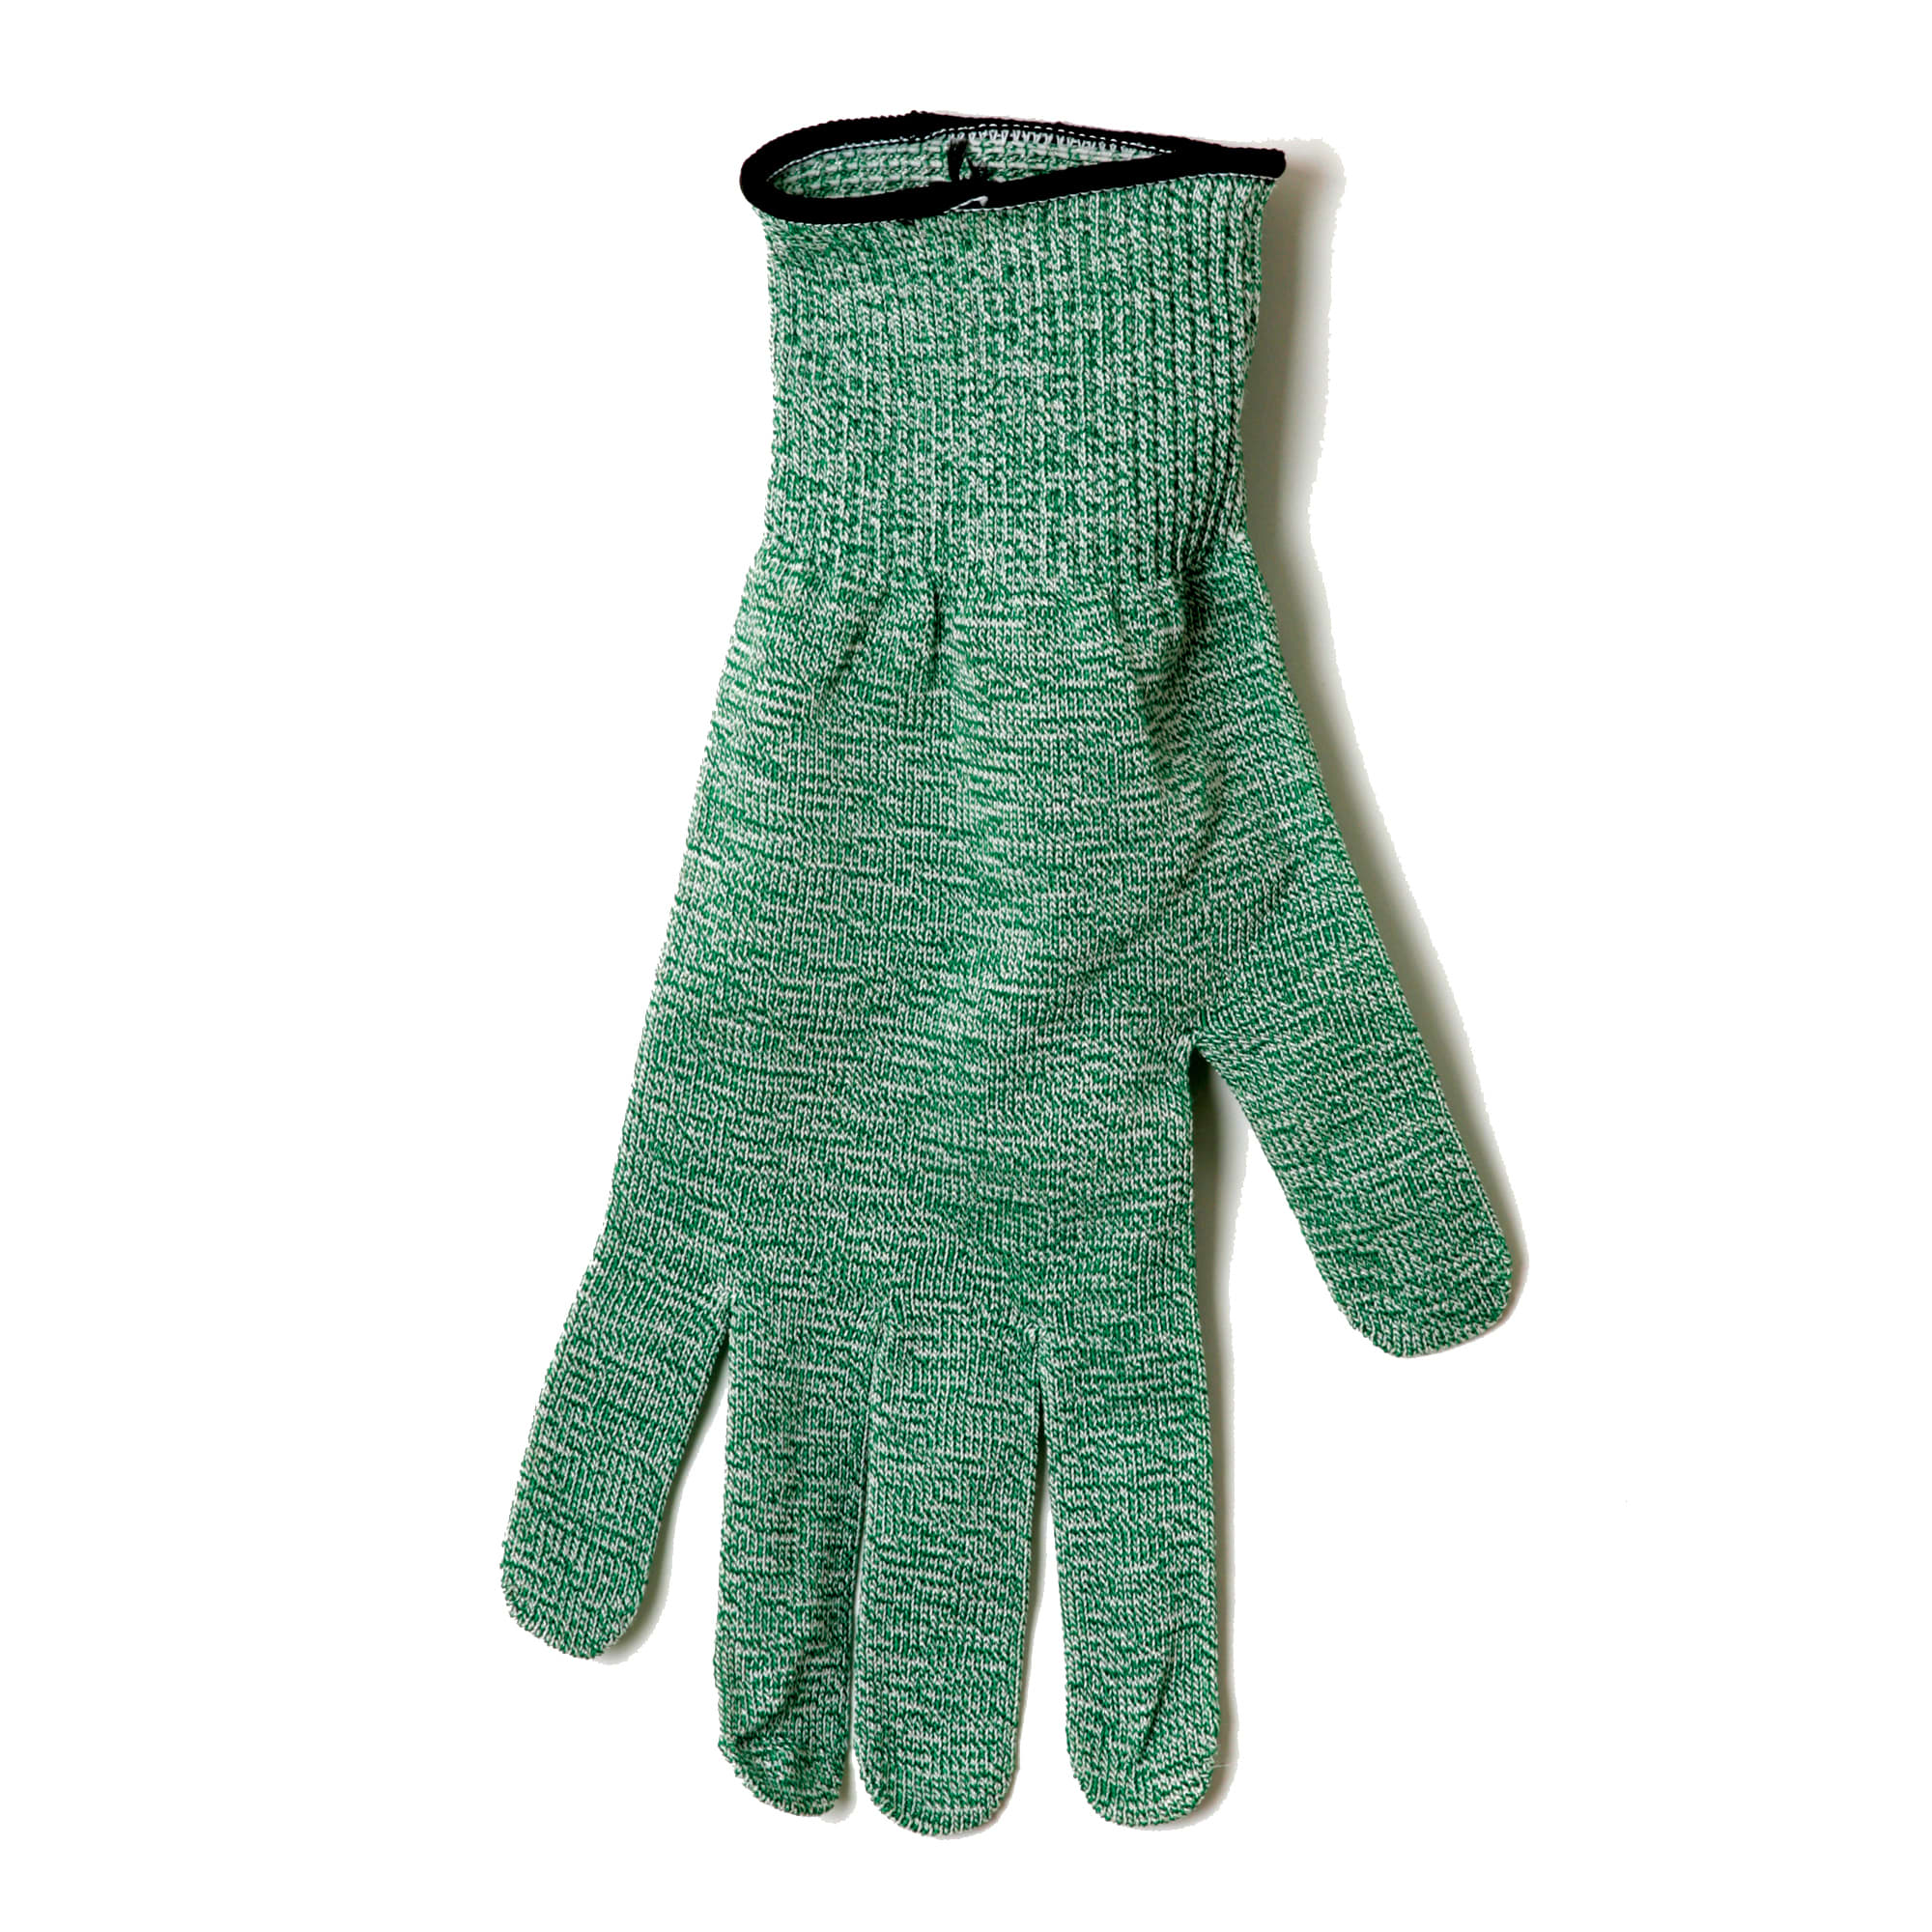 San Jamar Green 11 Inch Medium Cut Resistant Glove